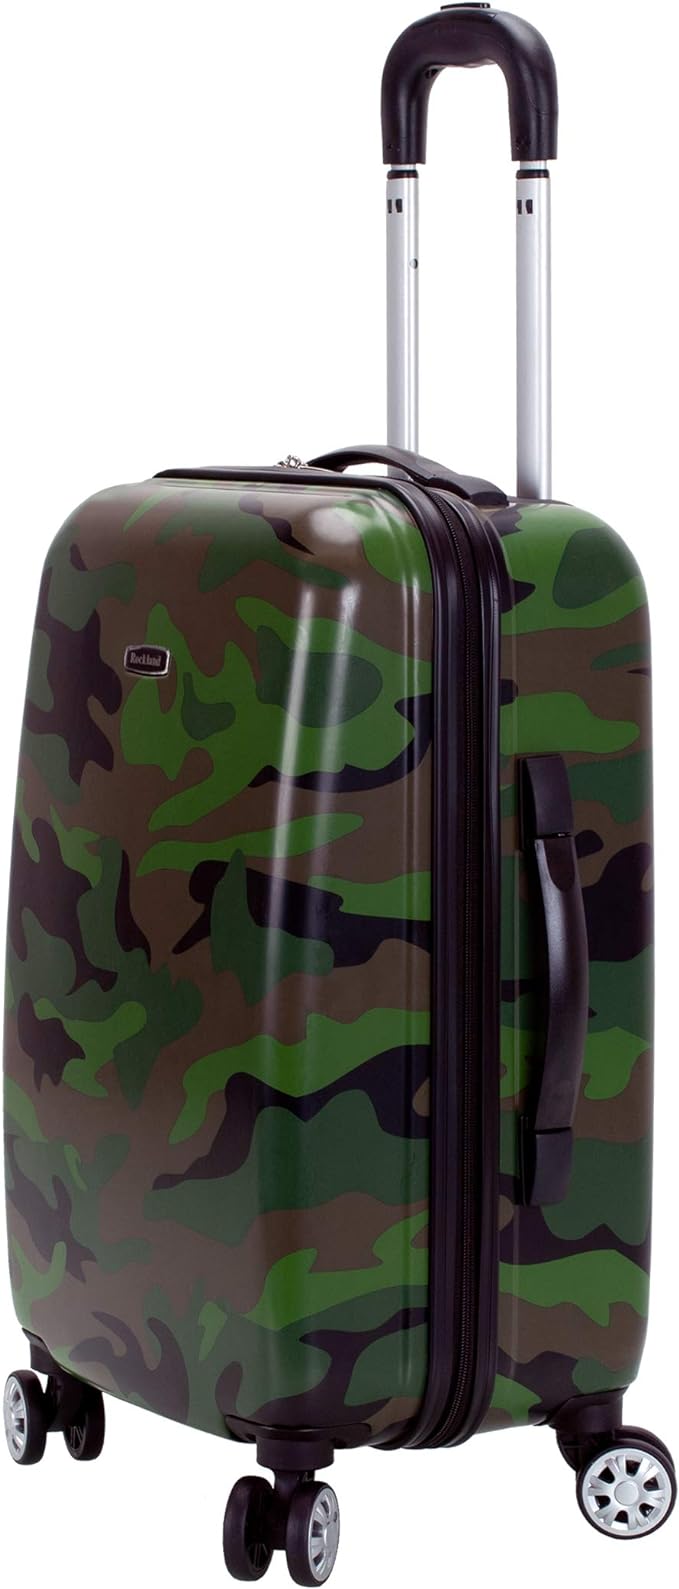 Rockland Safari Hardside Spinner Wheel Luggage 3-Piece (20/24/28) - Camouflage Like New